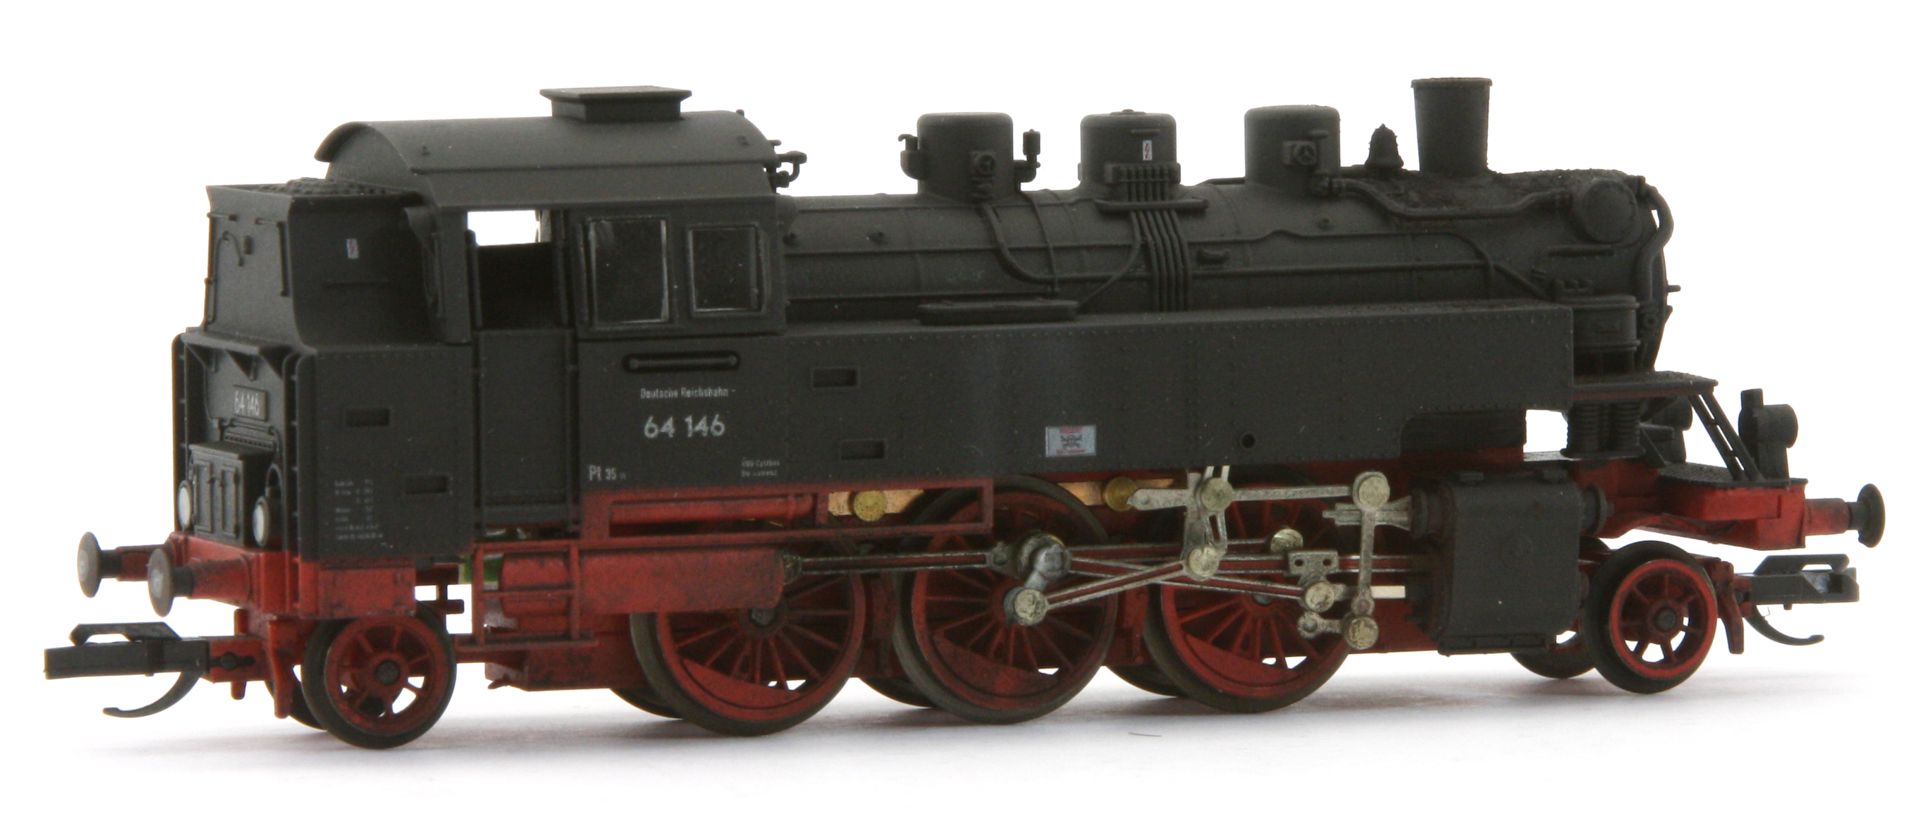 Saxonia 120096 - Dampflok 64 146, DR, Ep.III, gealtert